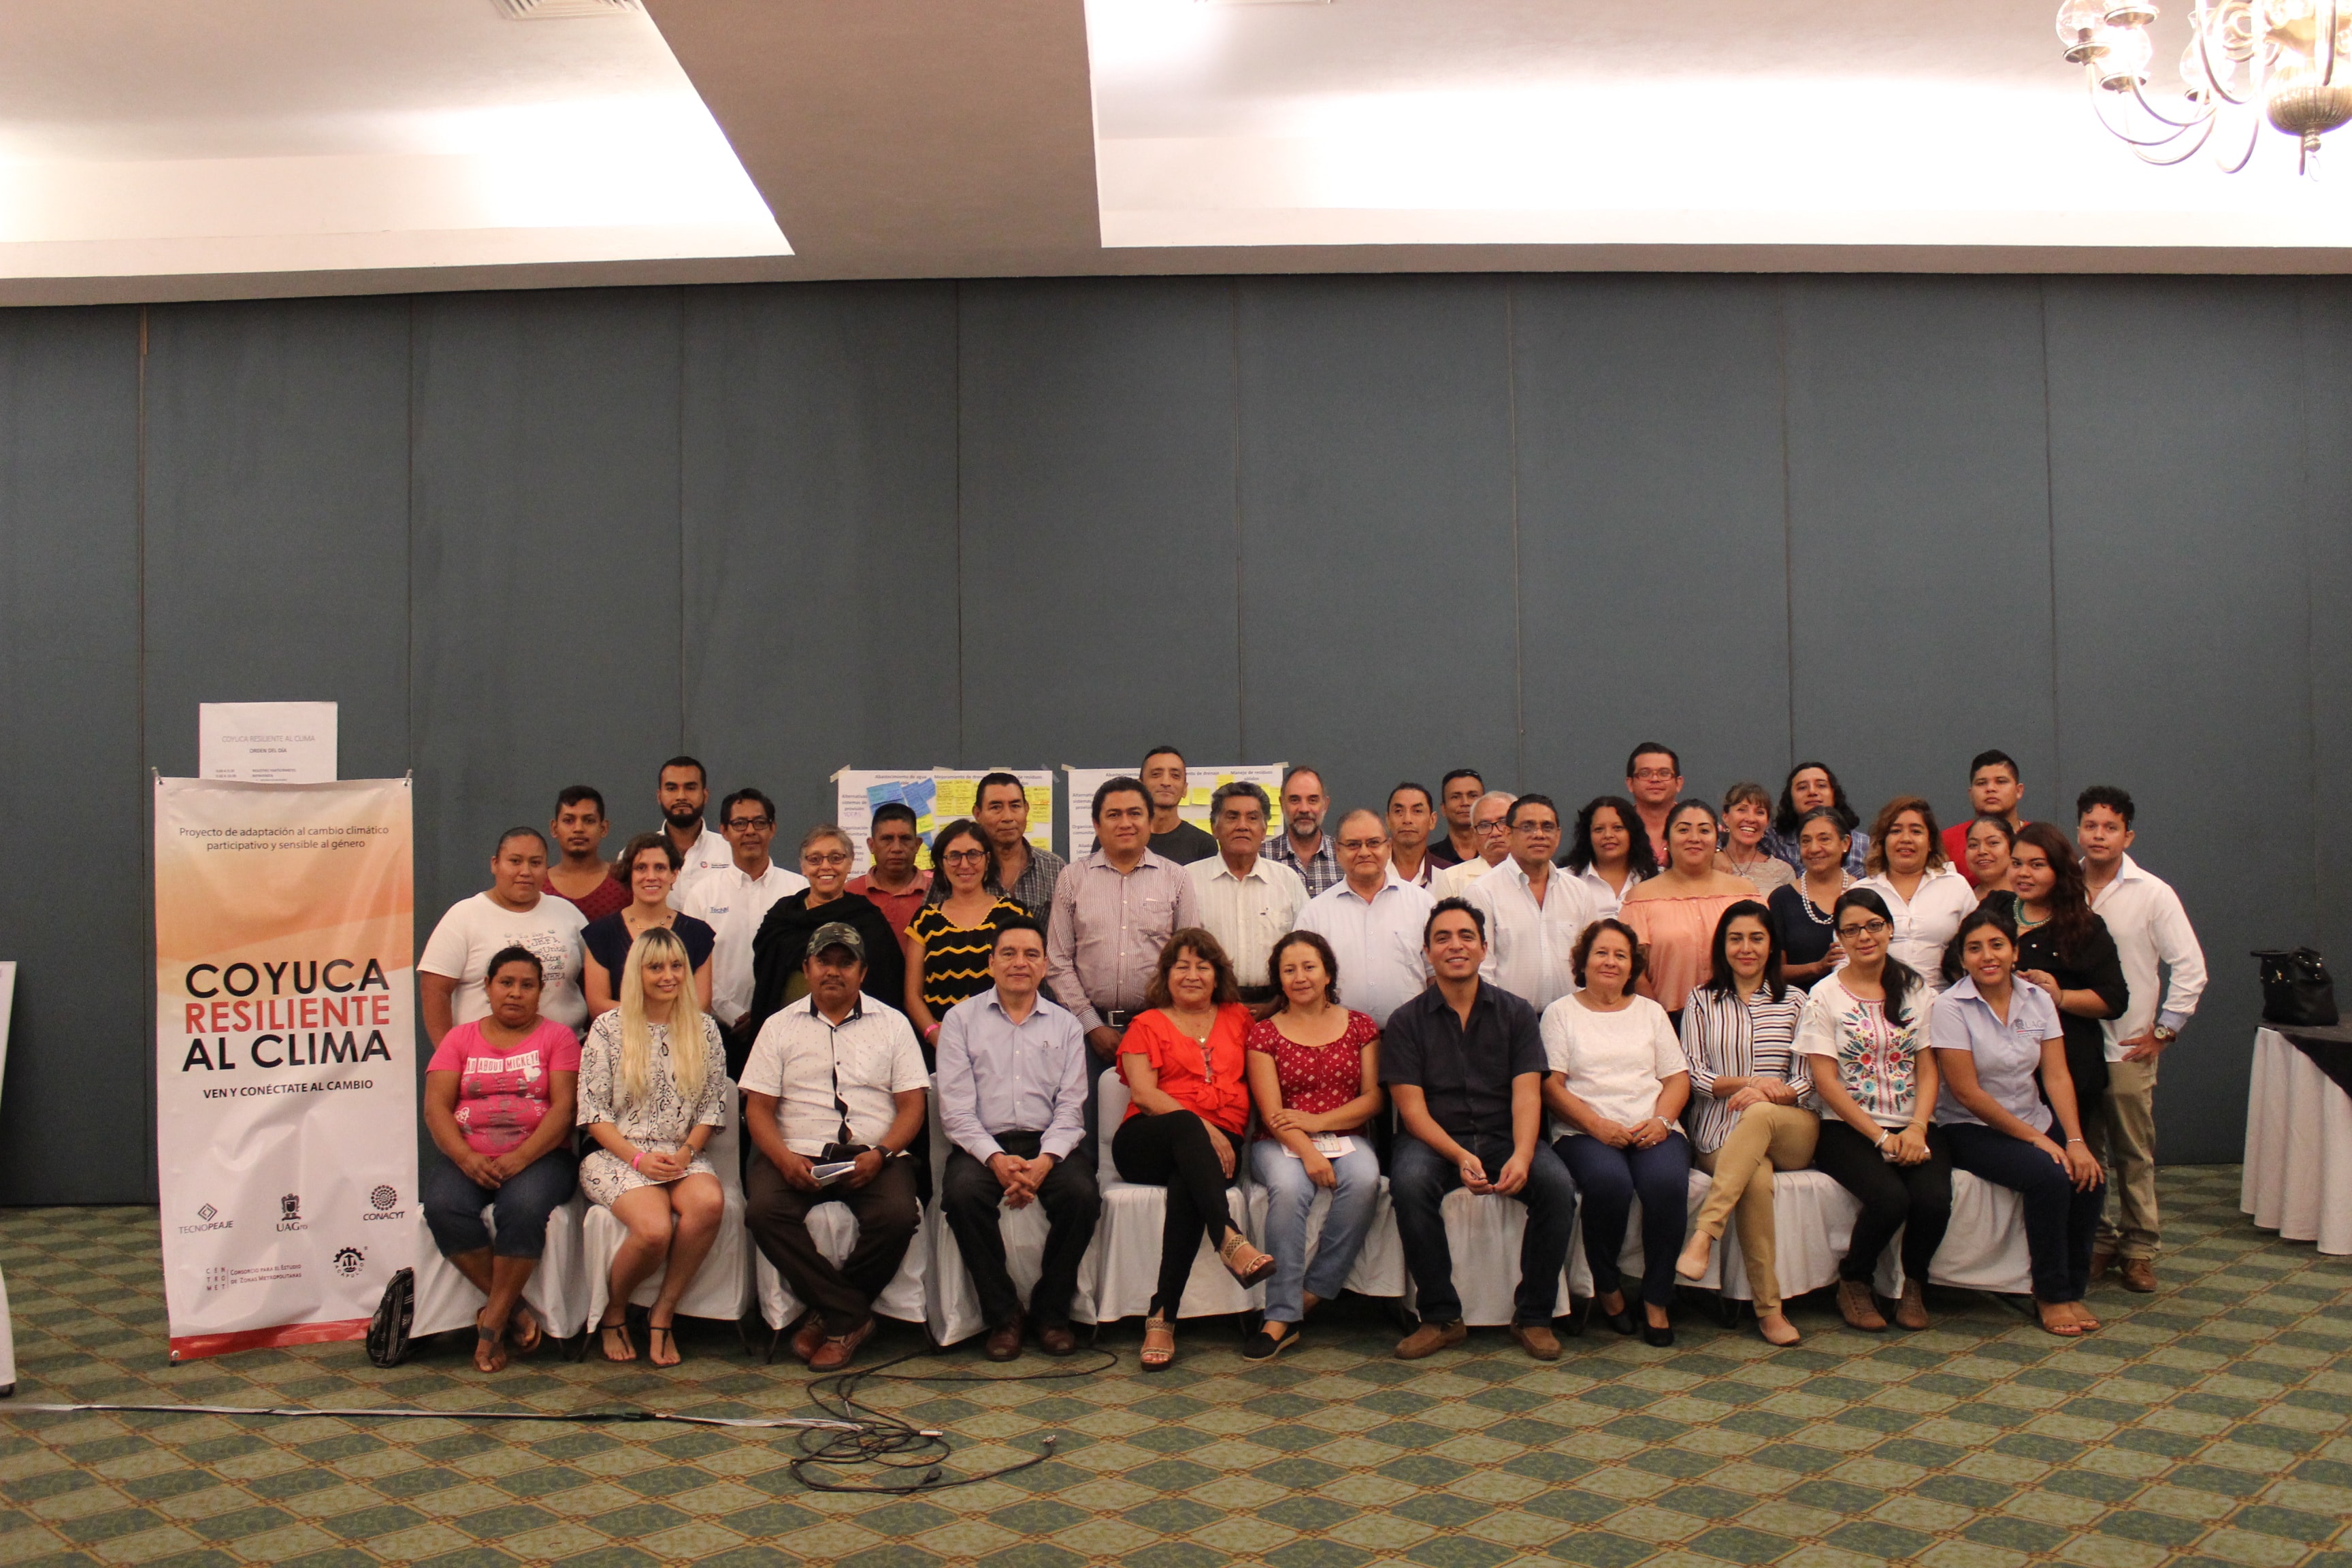 Evento de clausura proyecto Coyuca Resiliente al Clima